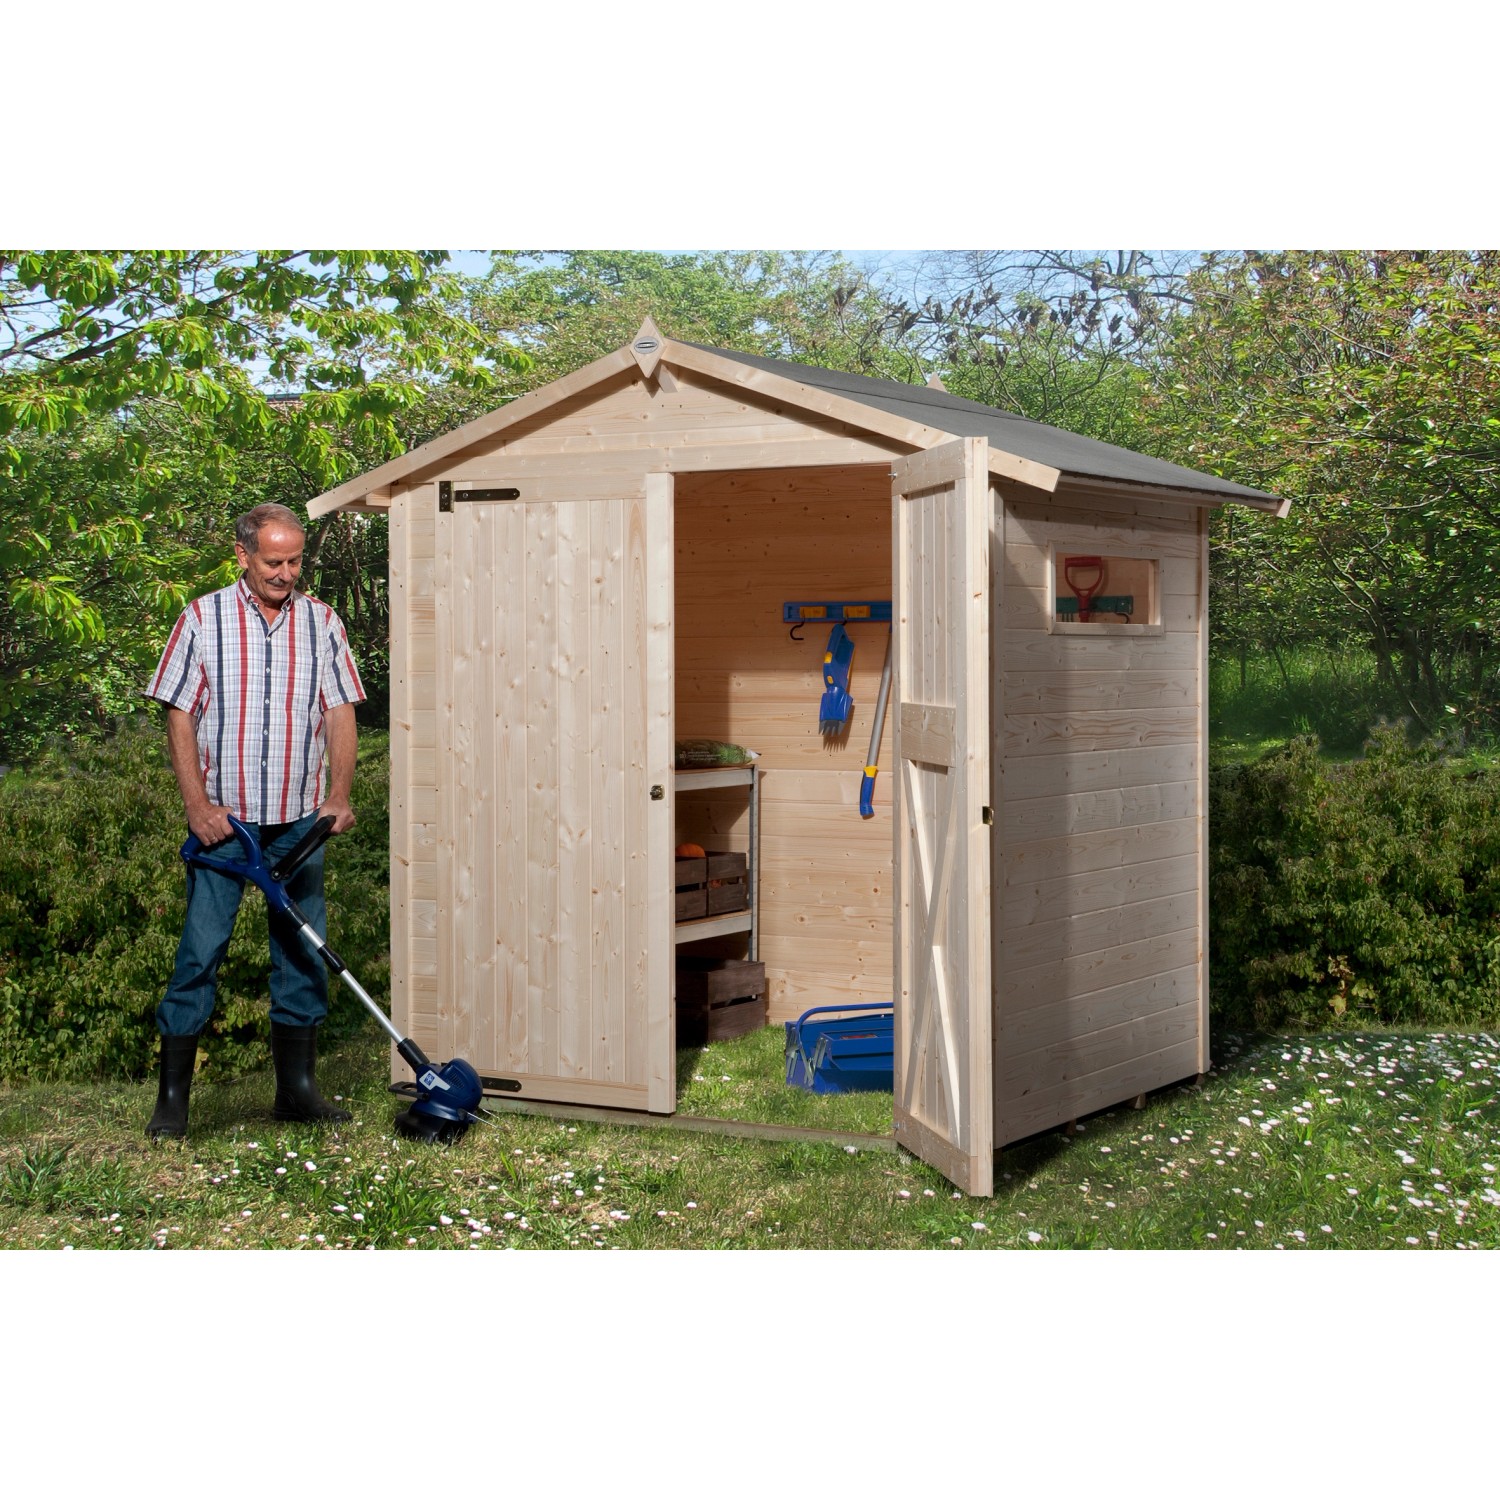 OBI Outdoor Living Holz-Gartenhaus Kompakt Satteldach 198 cm x 171 cm von OBI Outdoor Living